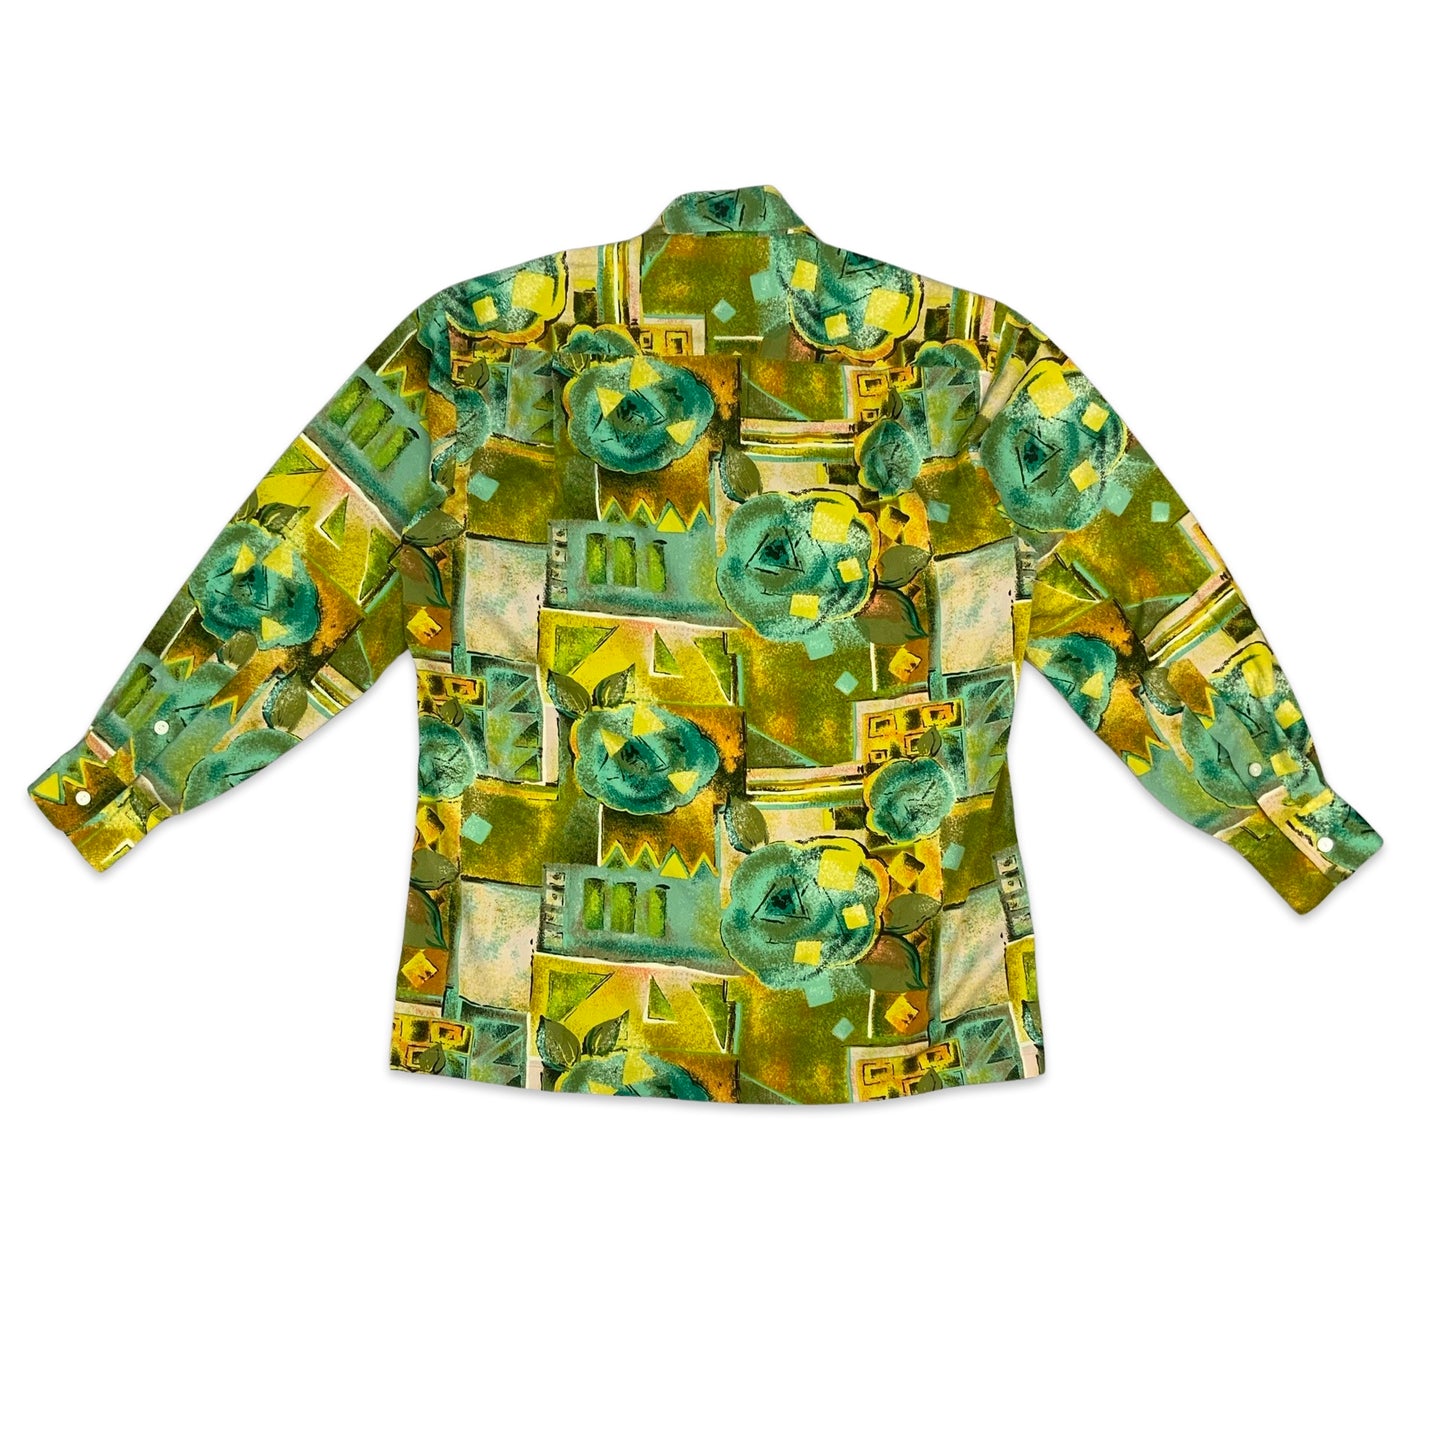 Vintage Yellow & Teal Abstract Print Shirt S